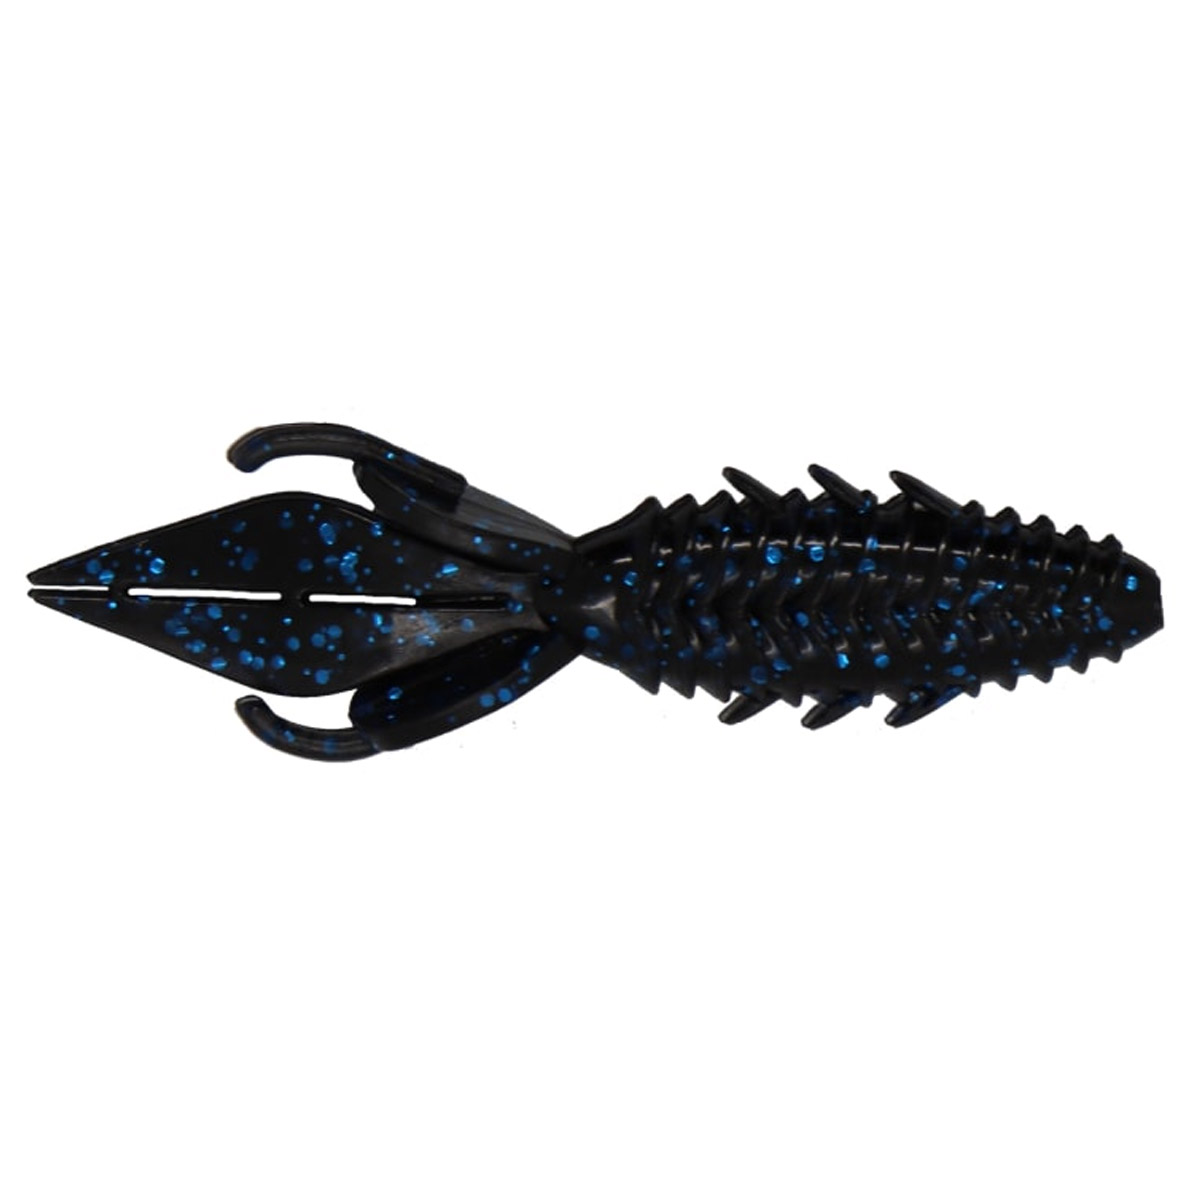 X Zone Adrenaline Bug Jr 3,5 Inch -  Black Blue Flake